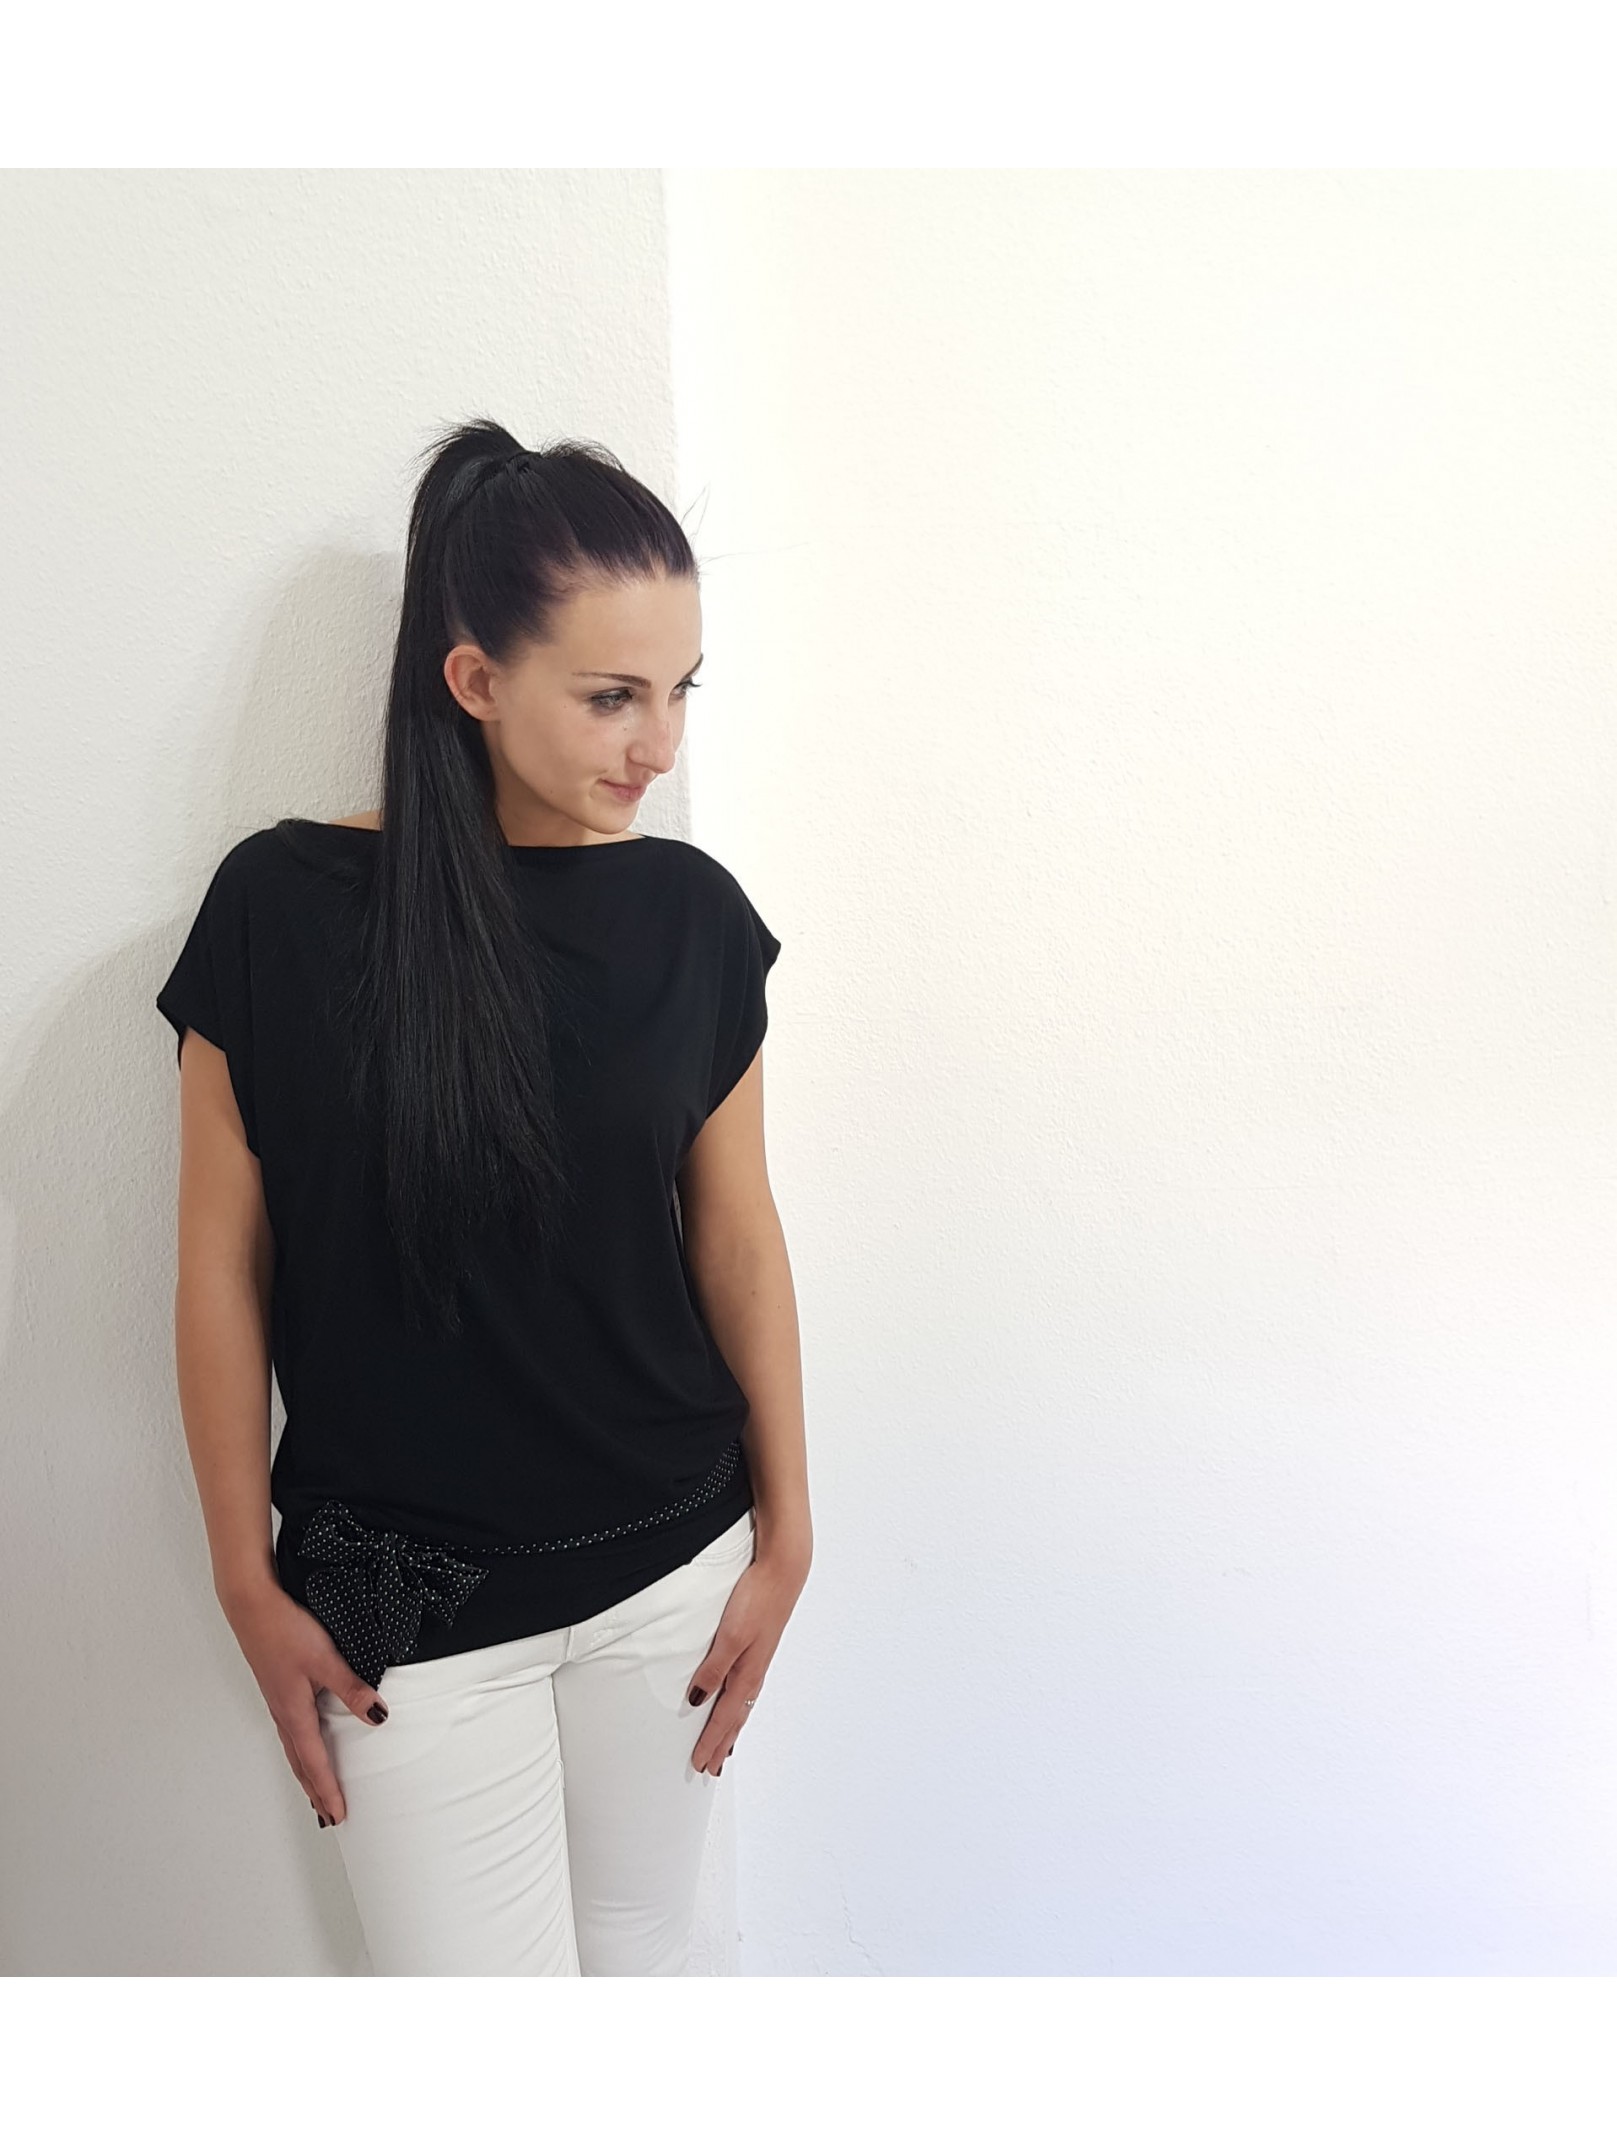 Iza Fabian, Schwarze Damen Shirt aus Viskose, breite Bund, Designer Mode.